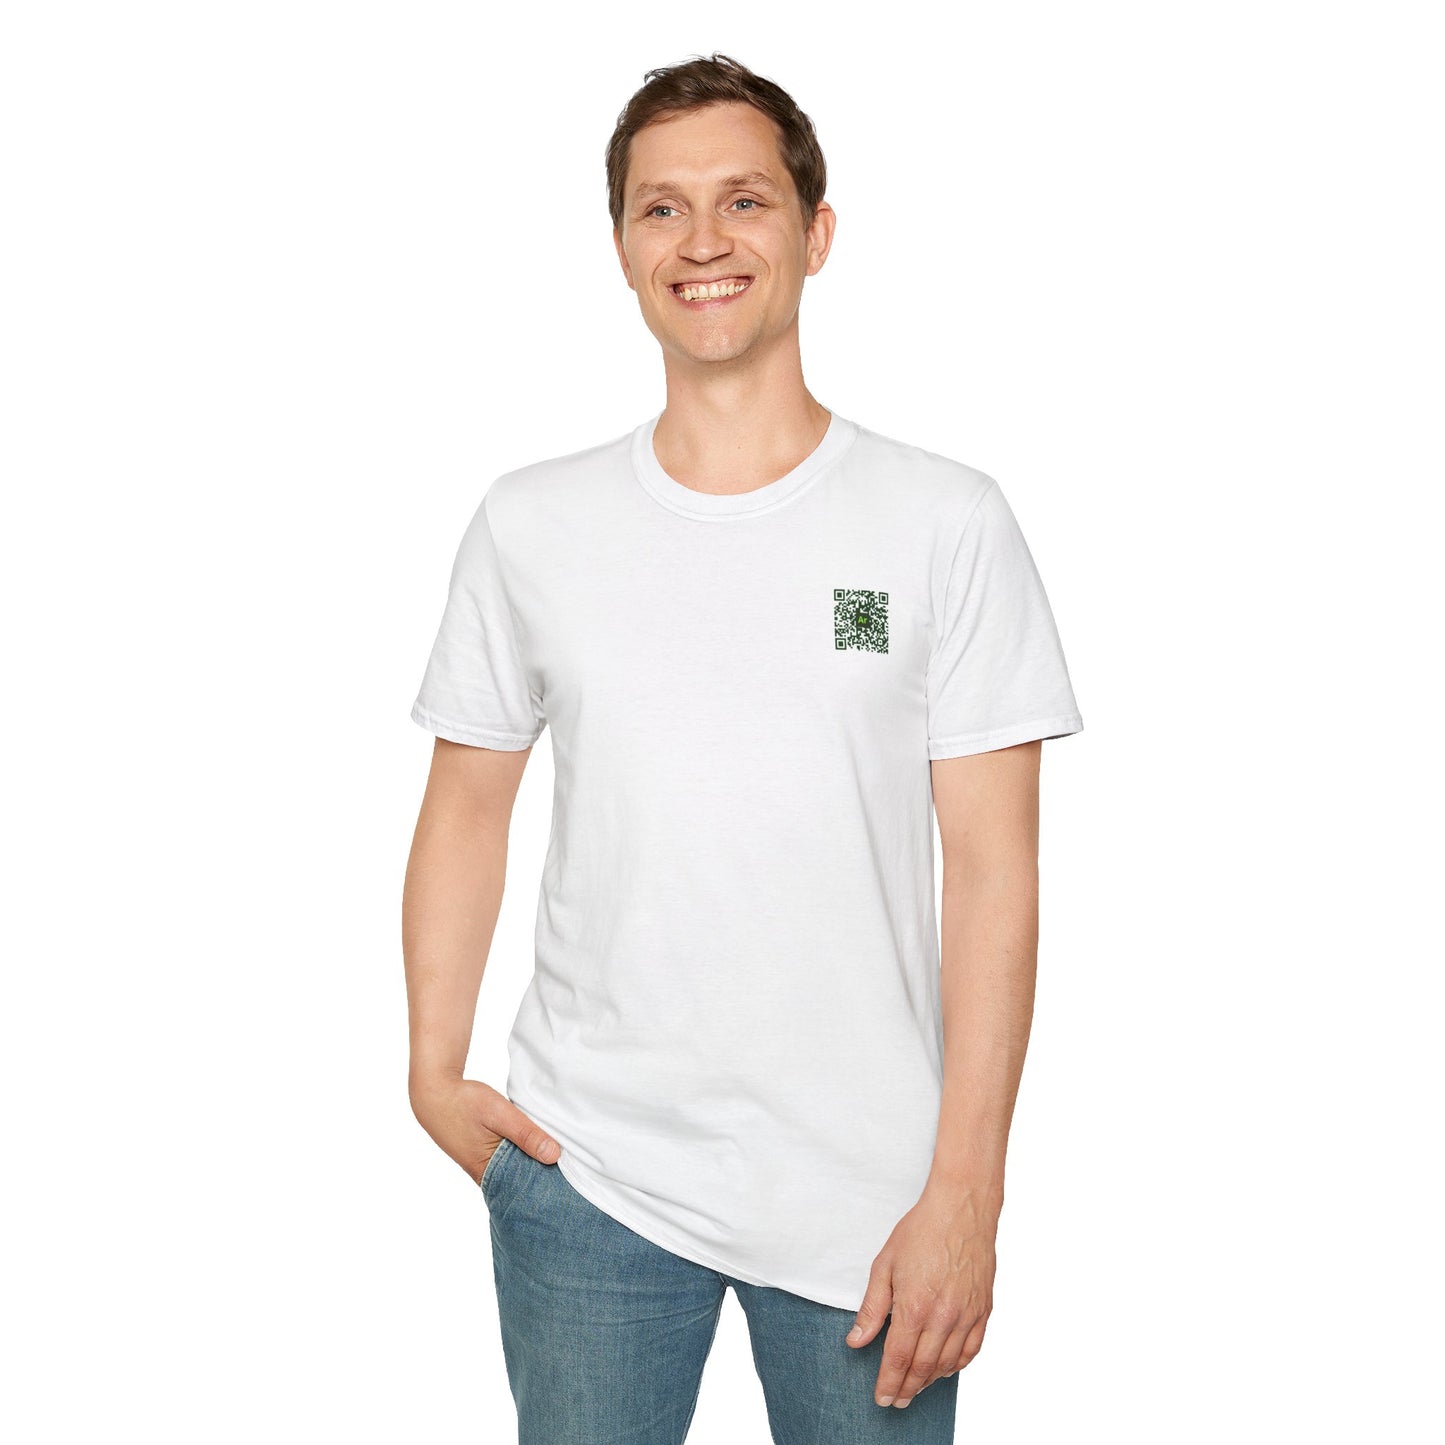 Comical Shapes - Unisex Softstyle T-Shirt